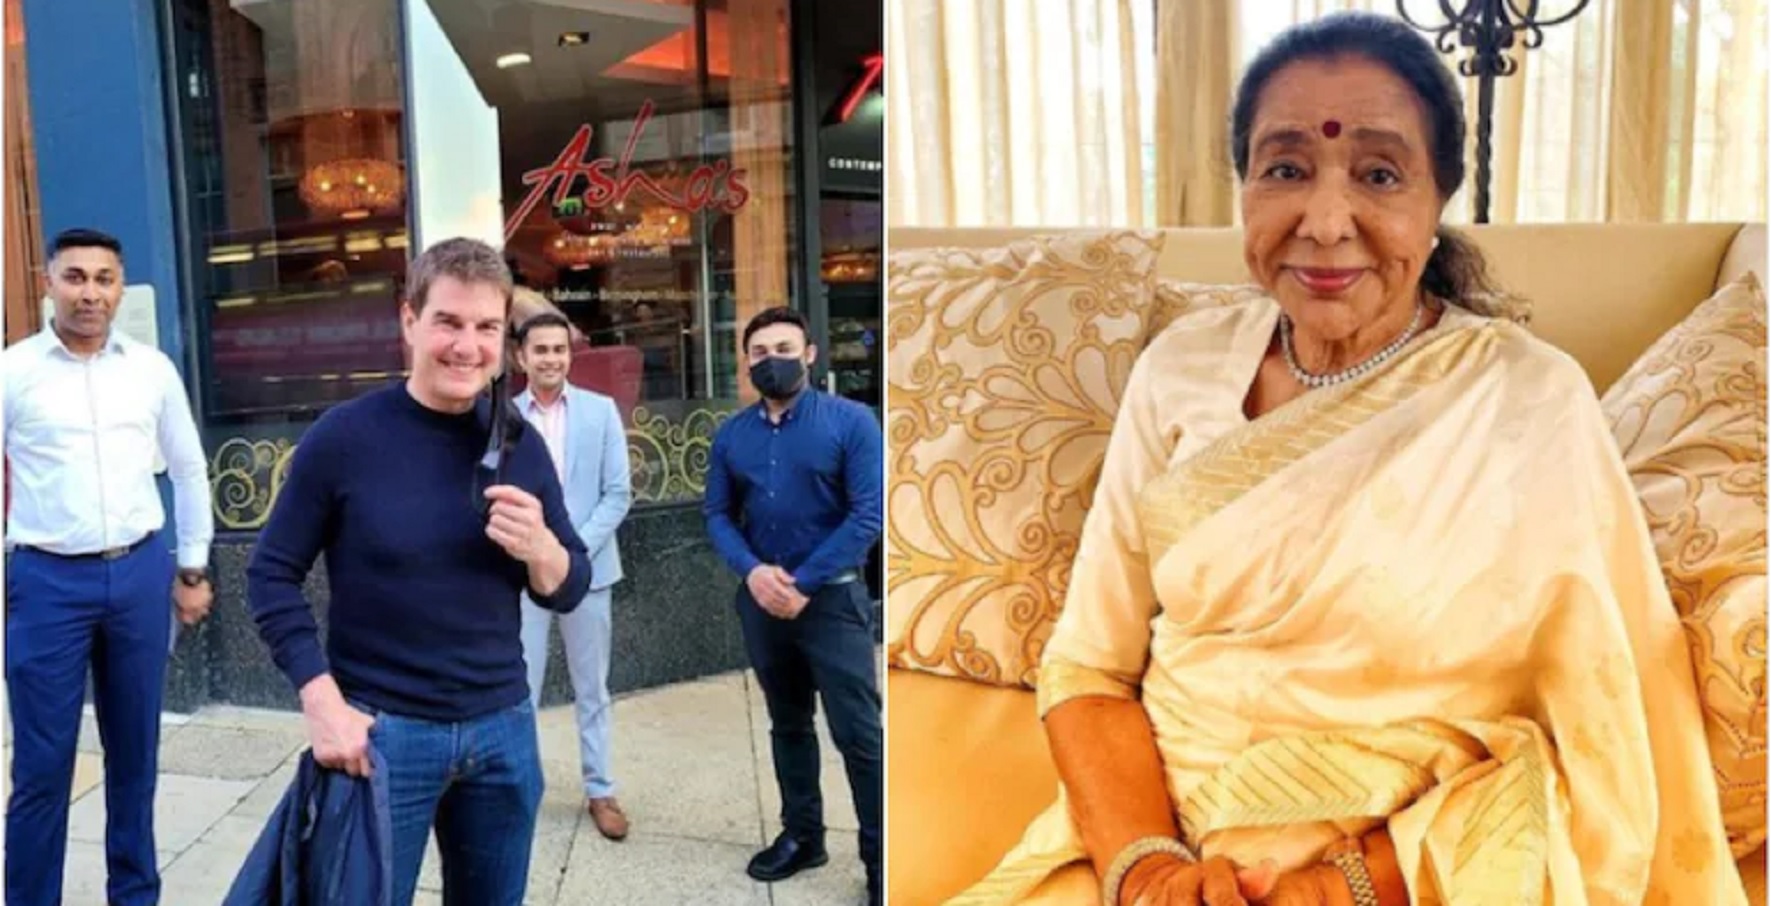 Tom Cruise Visits Asha Bhosle’s Restaurant To Indulge In Indian Cuisines